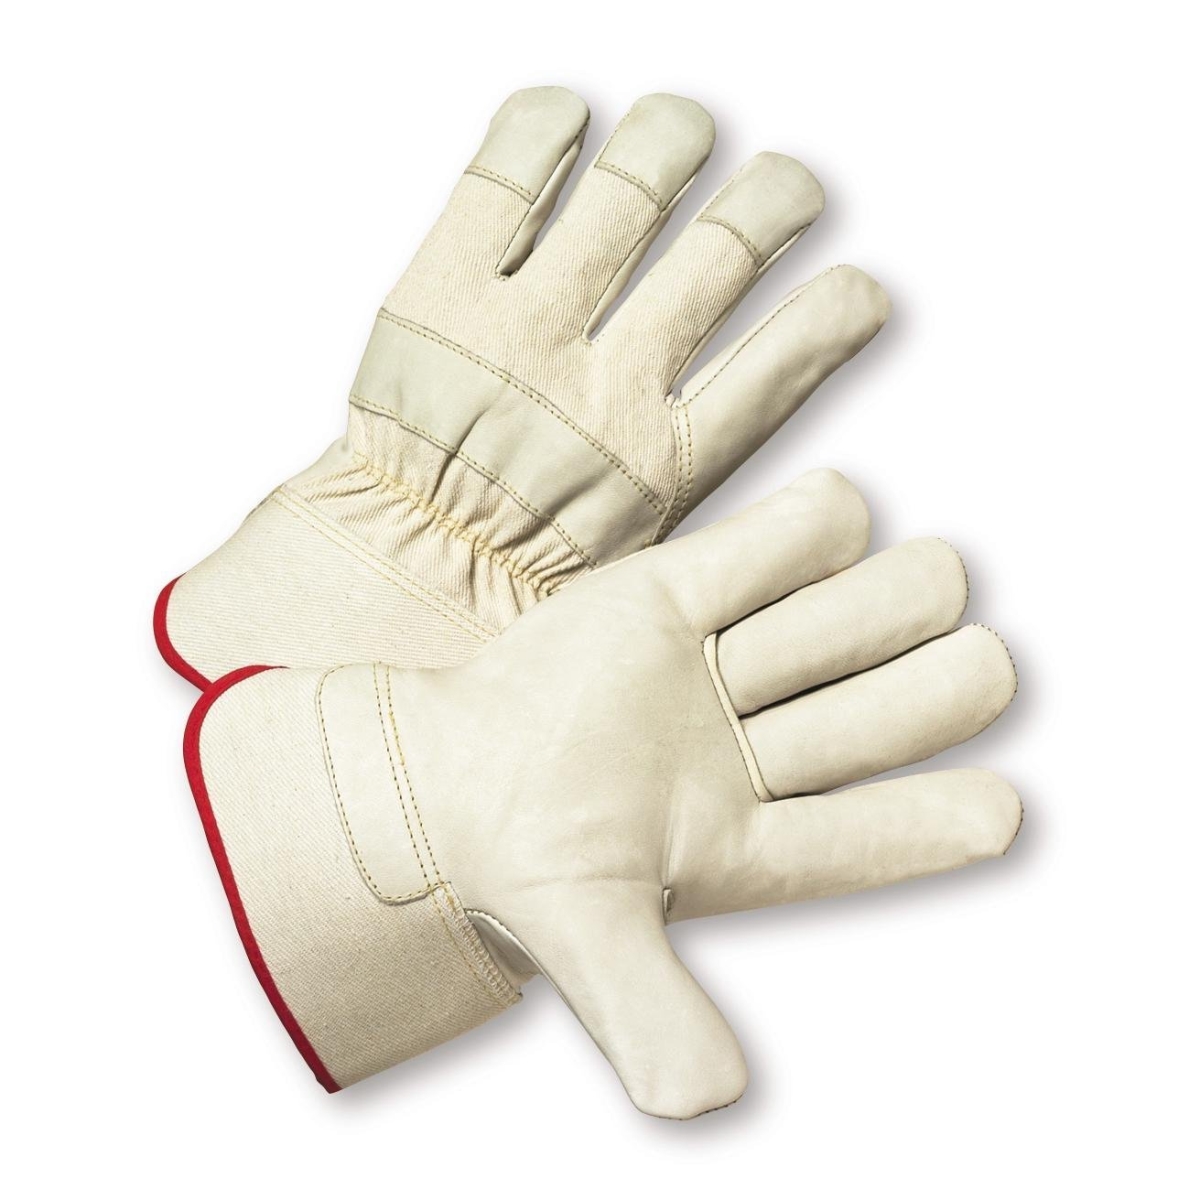 813-5000-l Premium Grain Cowhide Palm Rubberized Cuff Gloves - Large